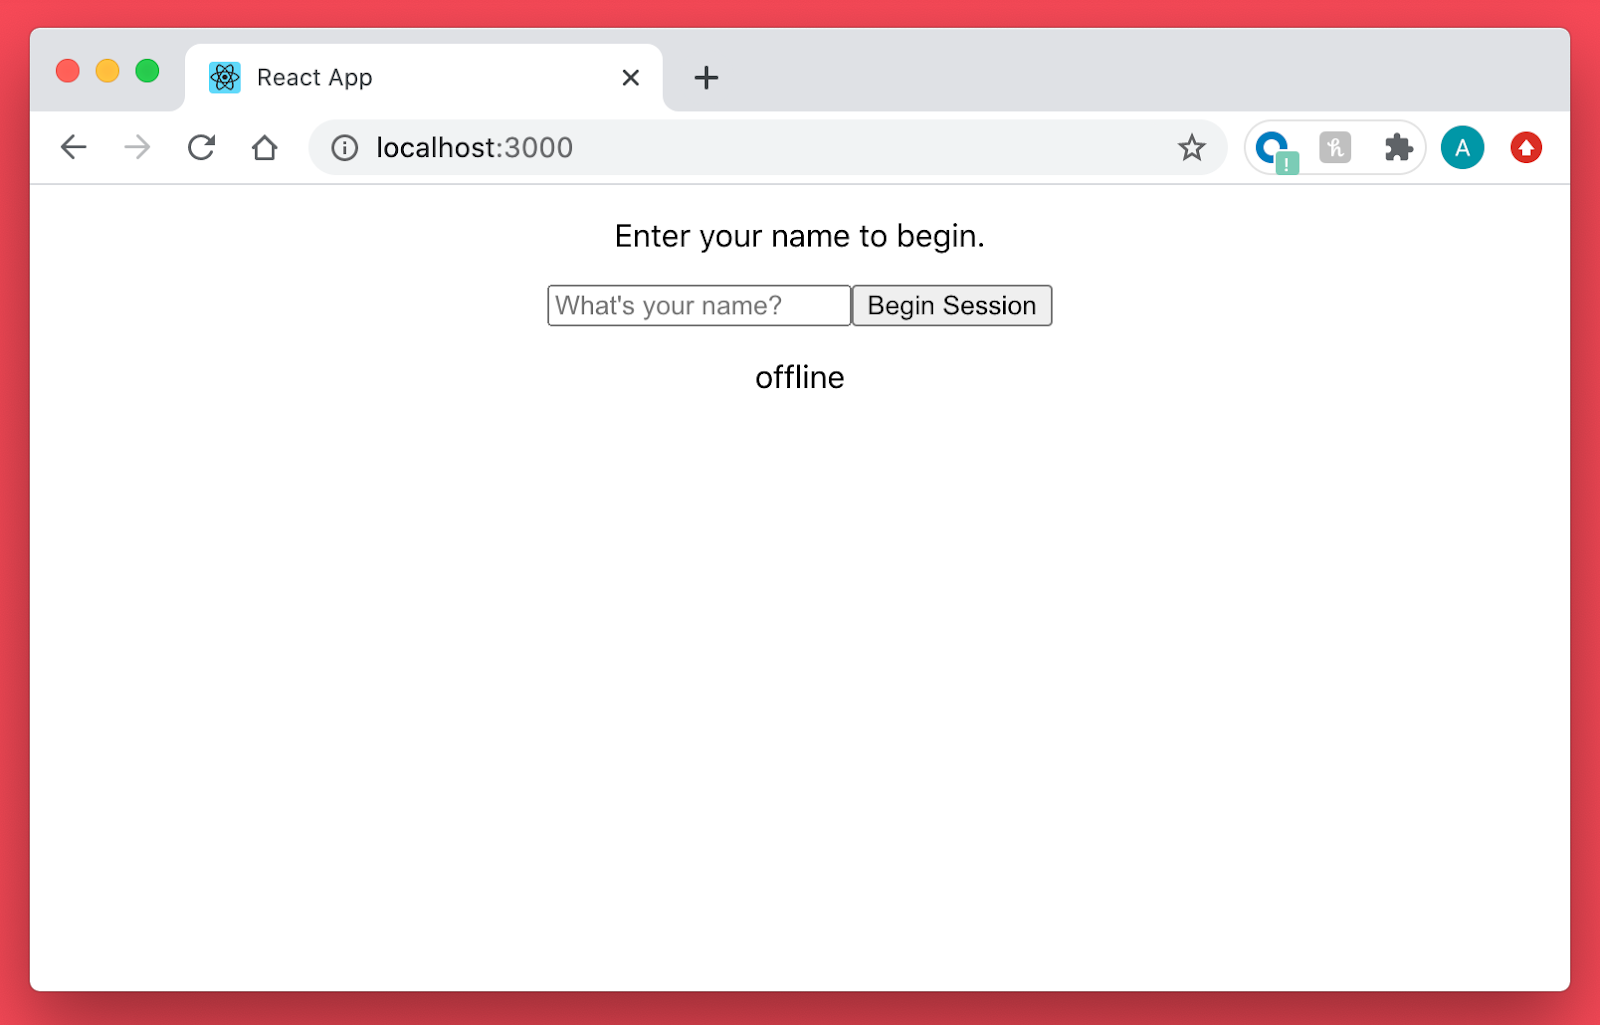 Screenshot of react app showing input form